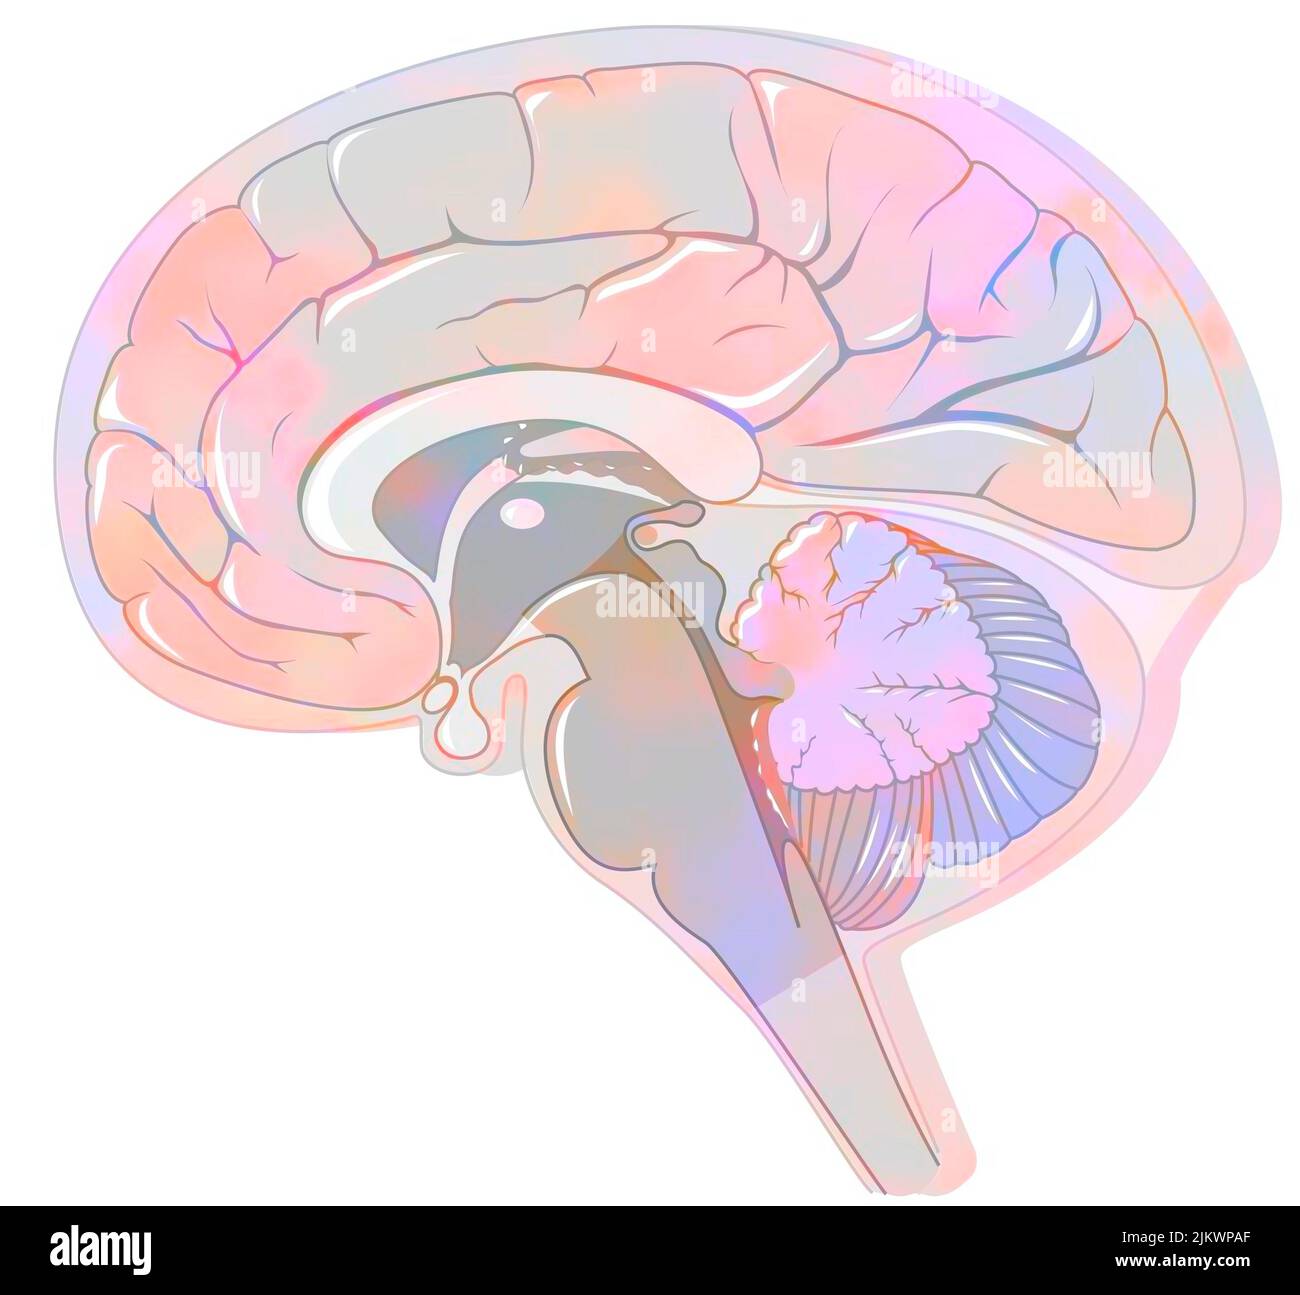 Sagittaler Abschnitt des Gehirns mit Hirnhäuten und Liquor. Stockfoto